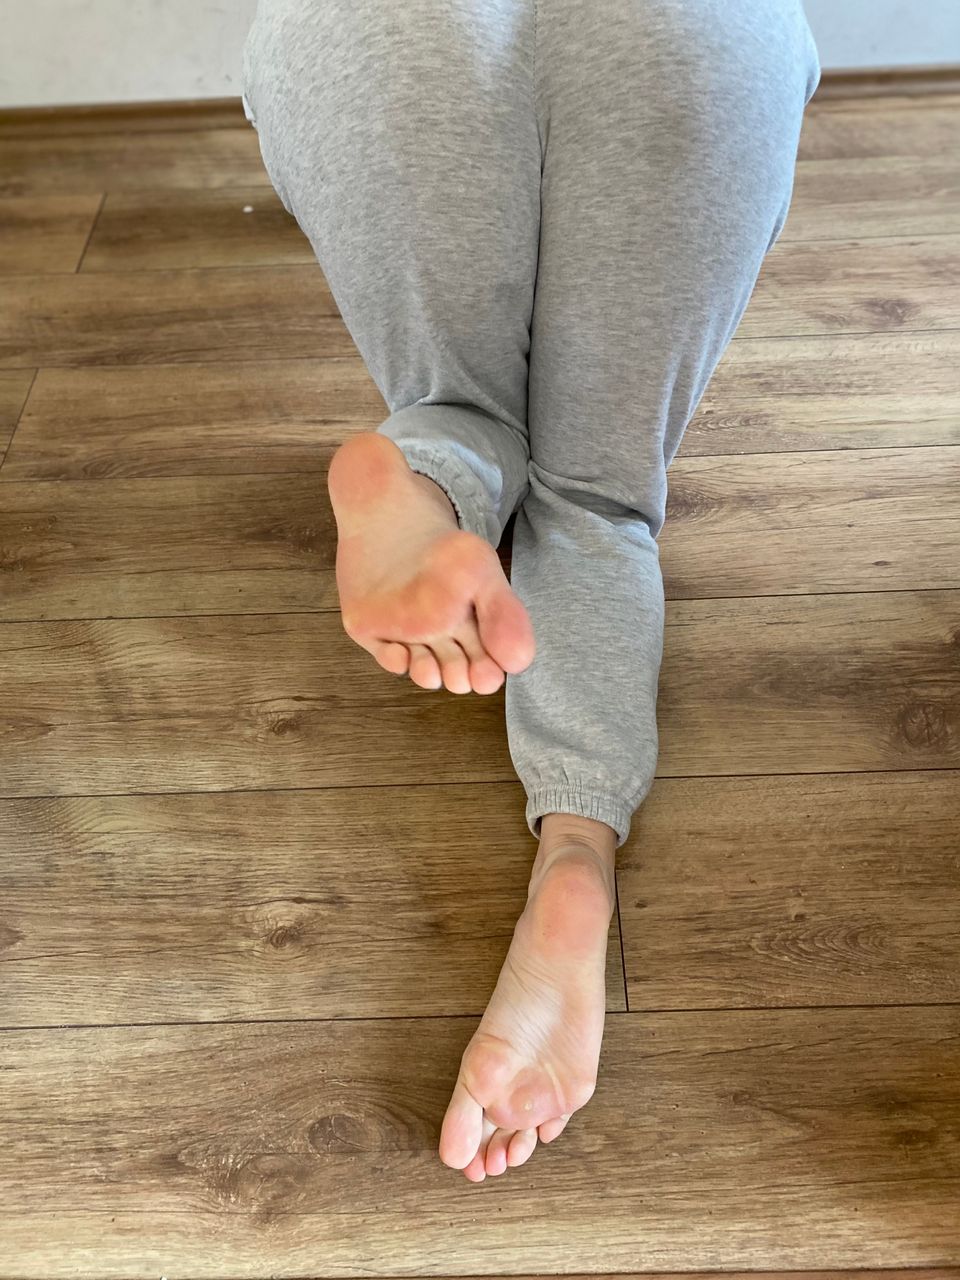 Tessa Aiina My Juicy Ass And My Feet